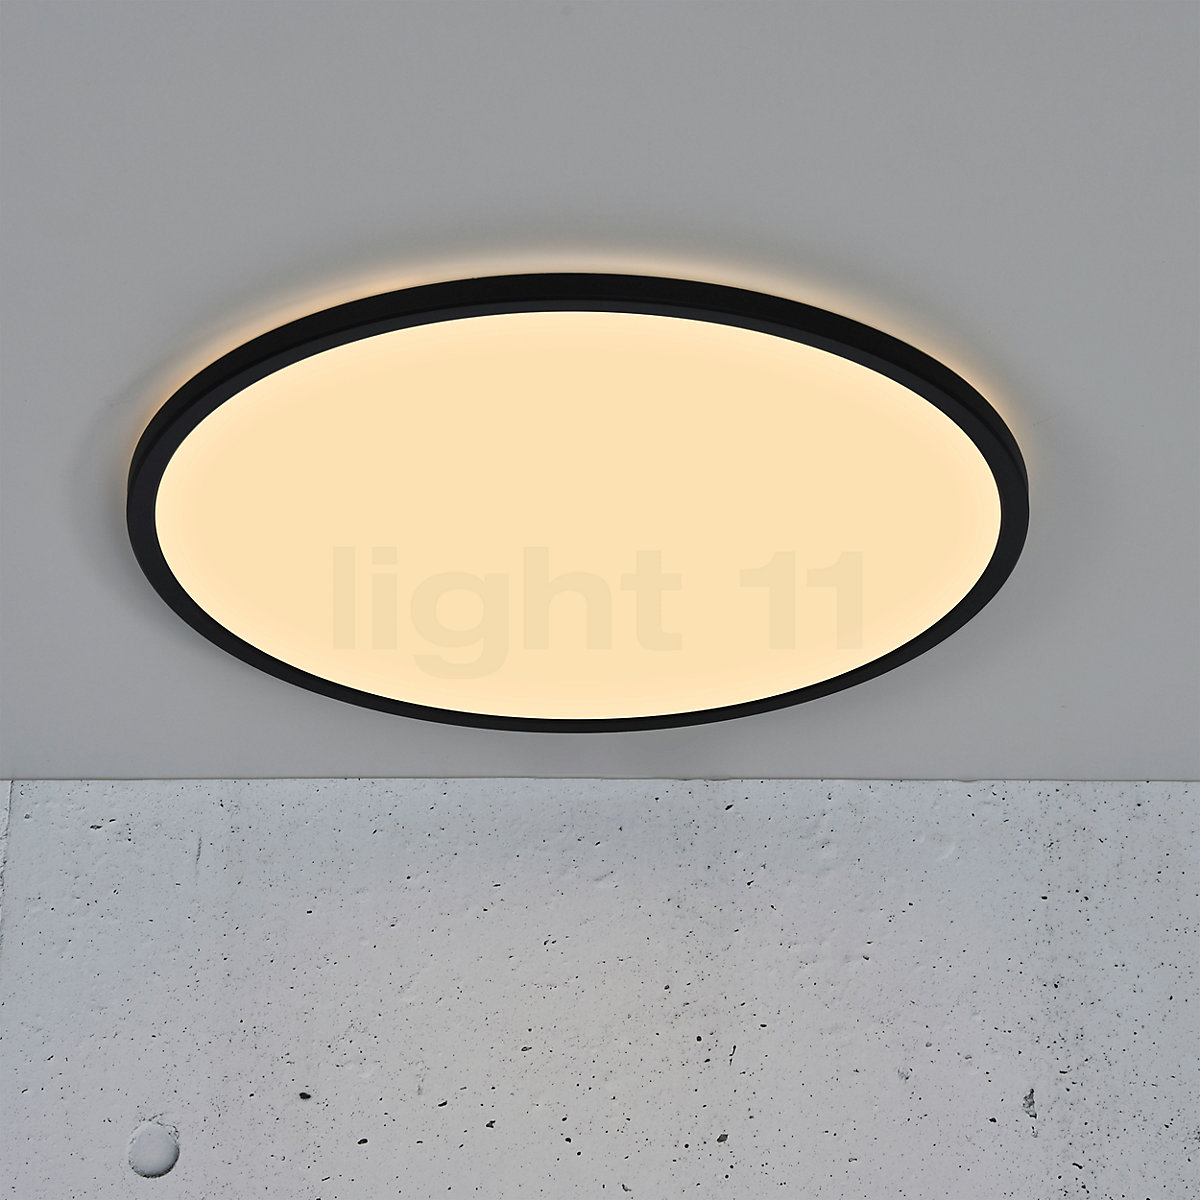 Buy Nordlux Oja Smart Ceiling Light LED at